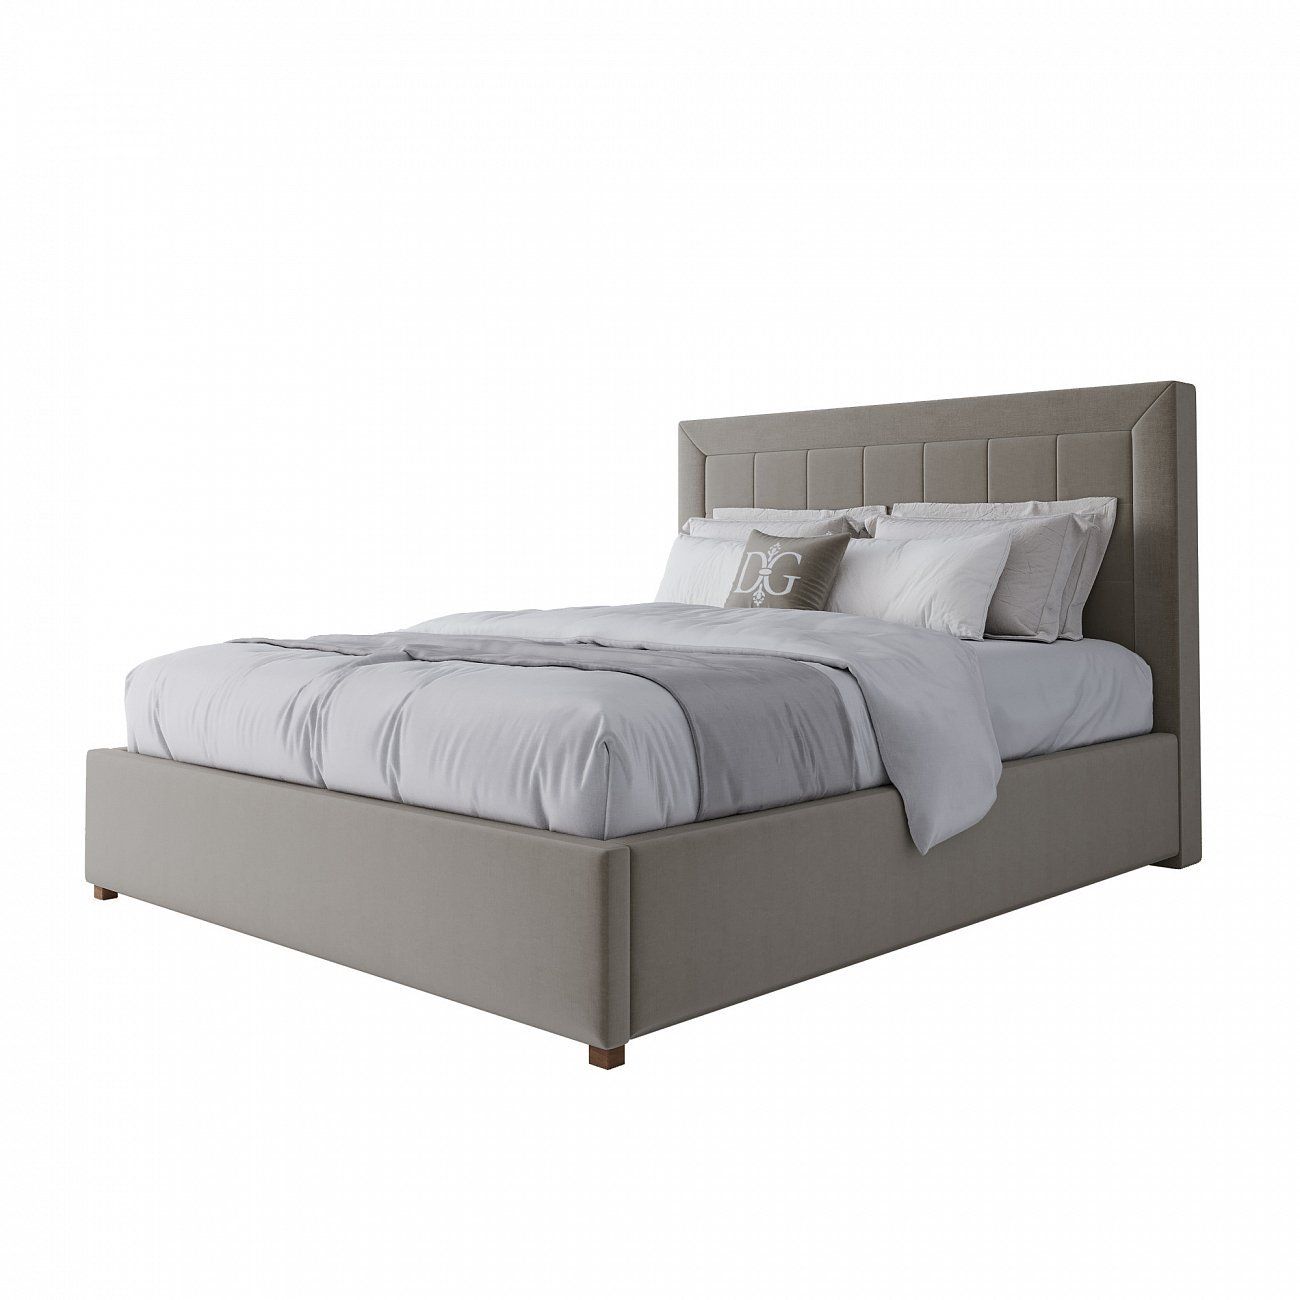 Double bed 160x200 brown-gray Elizabeth